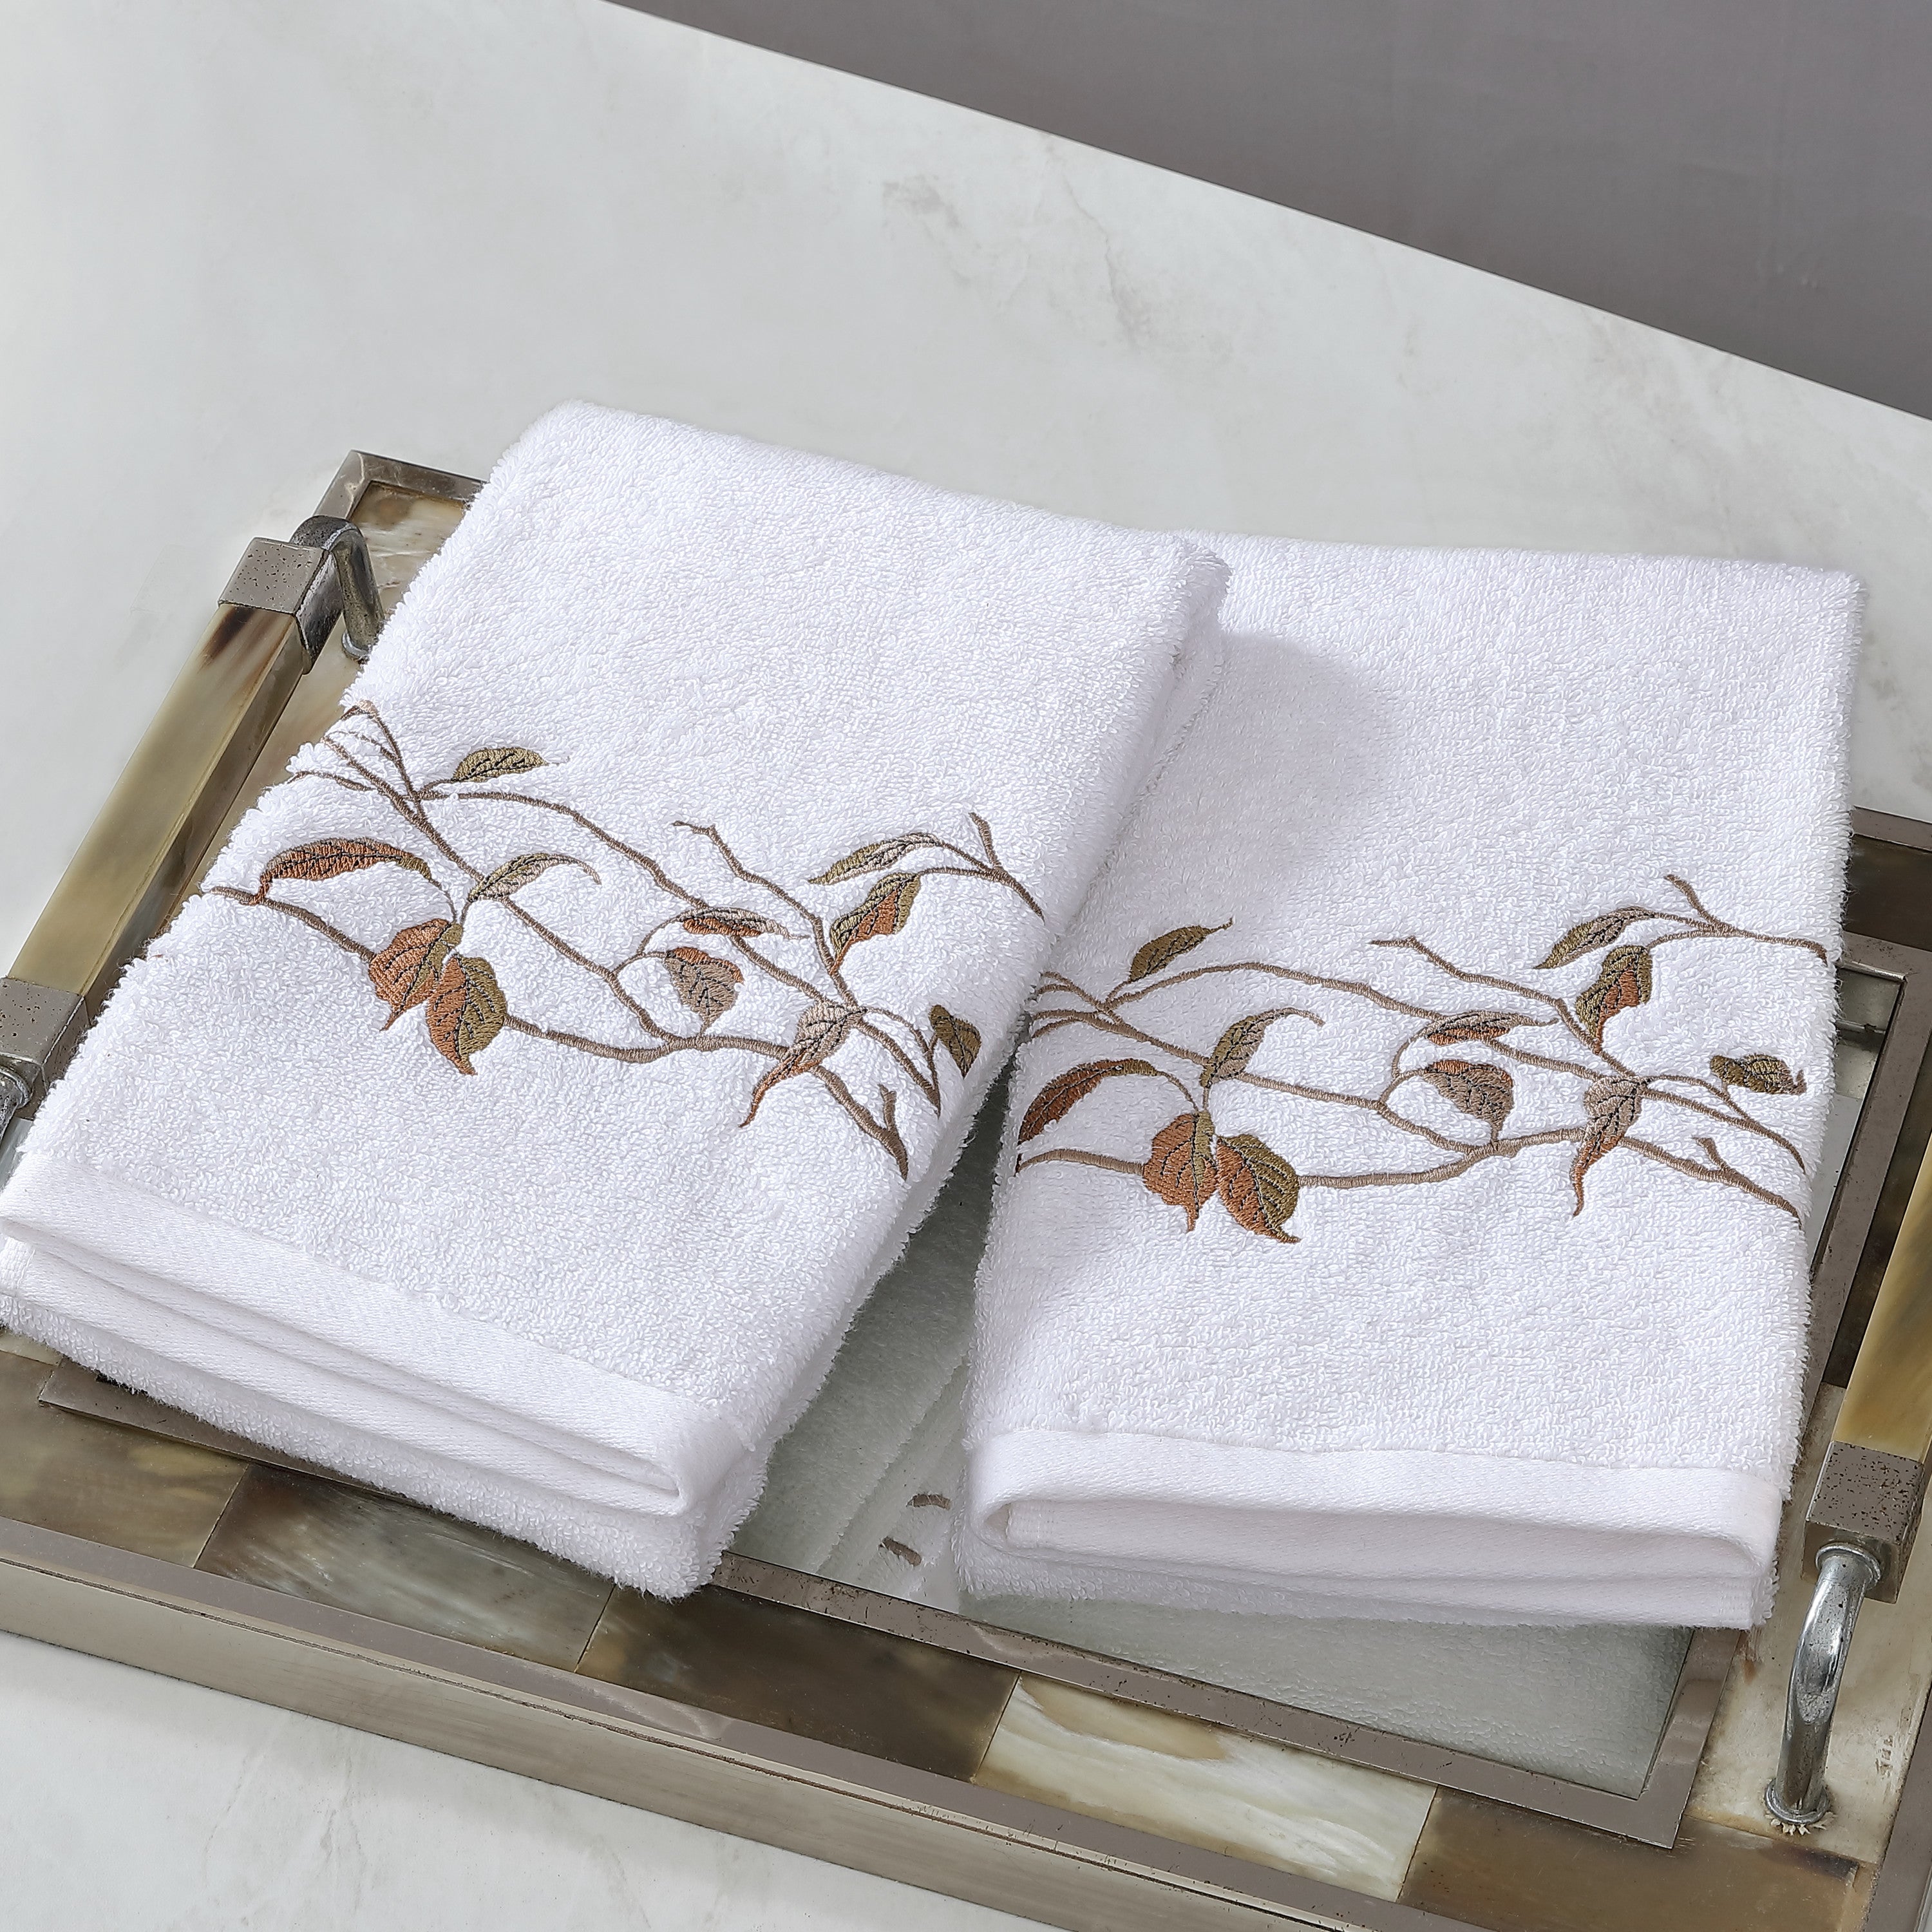 Rosefan Embroidered Bath Towels